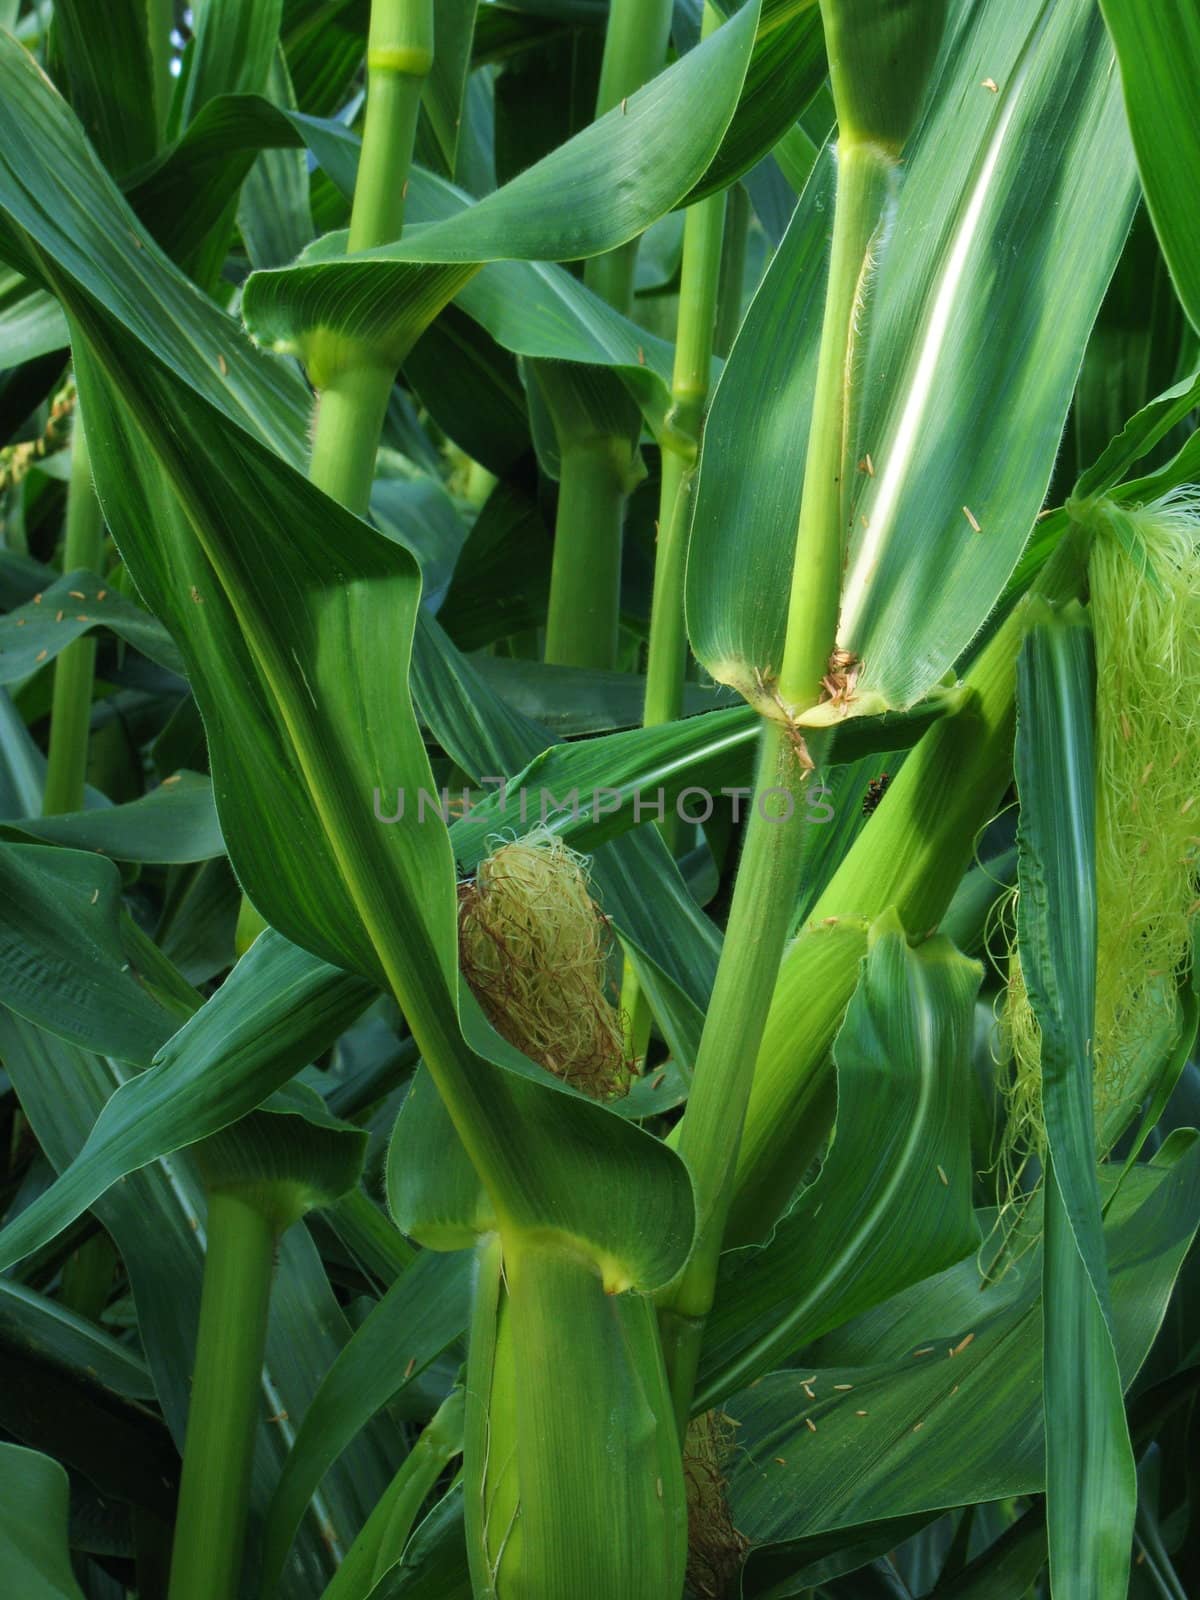 Growing corn by Vitamin